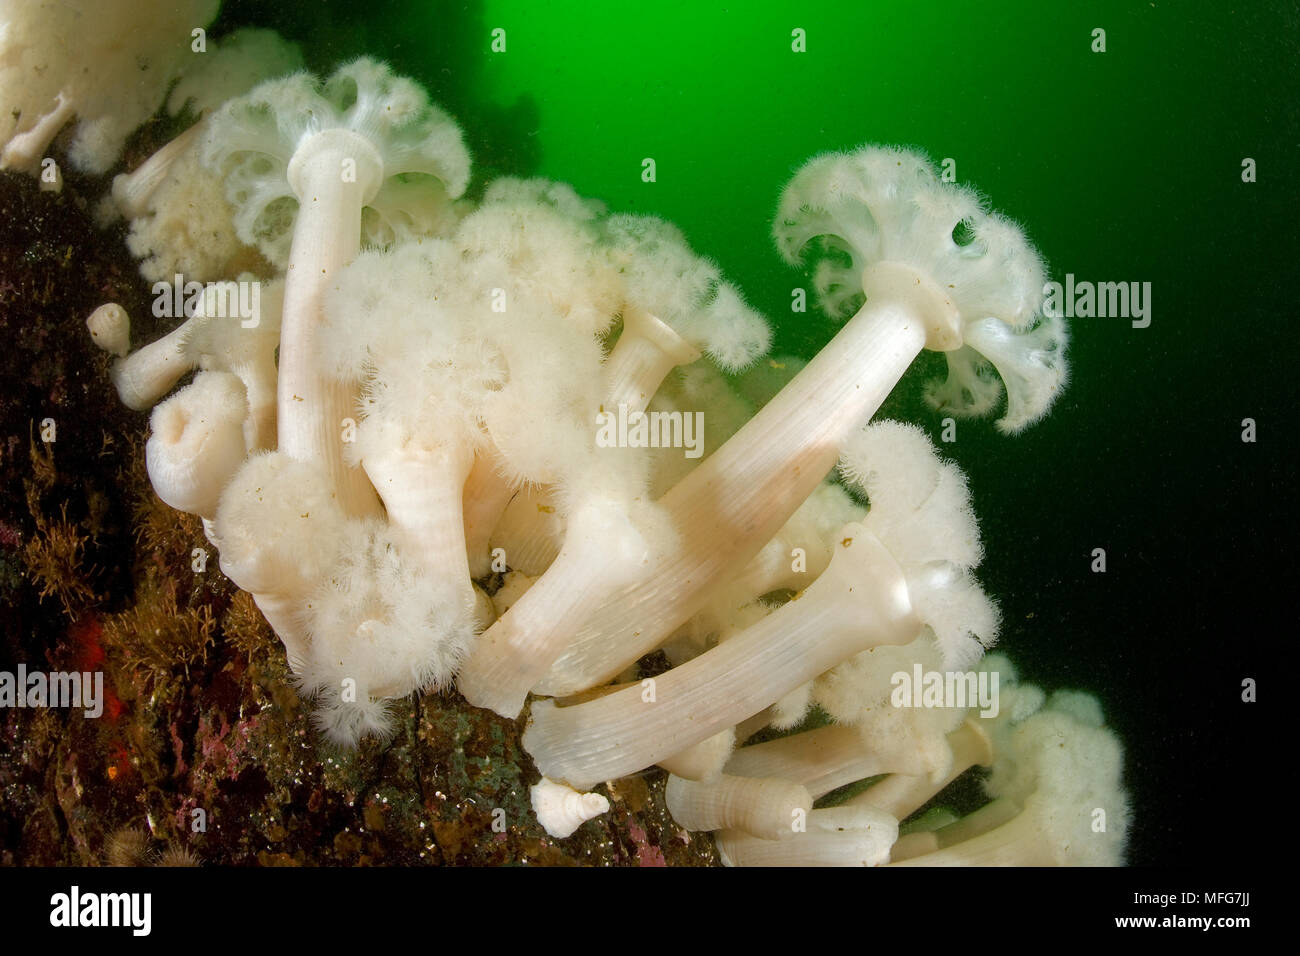 White-plumed anemone, Metridium senile, Vancouver Island, British Columbia, Canada, Pacific Ocean  Date: 22.07.08  Ref: ZB777 117075 0003  COMPULSORY Stock Photo